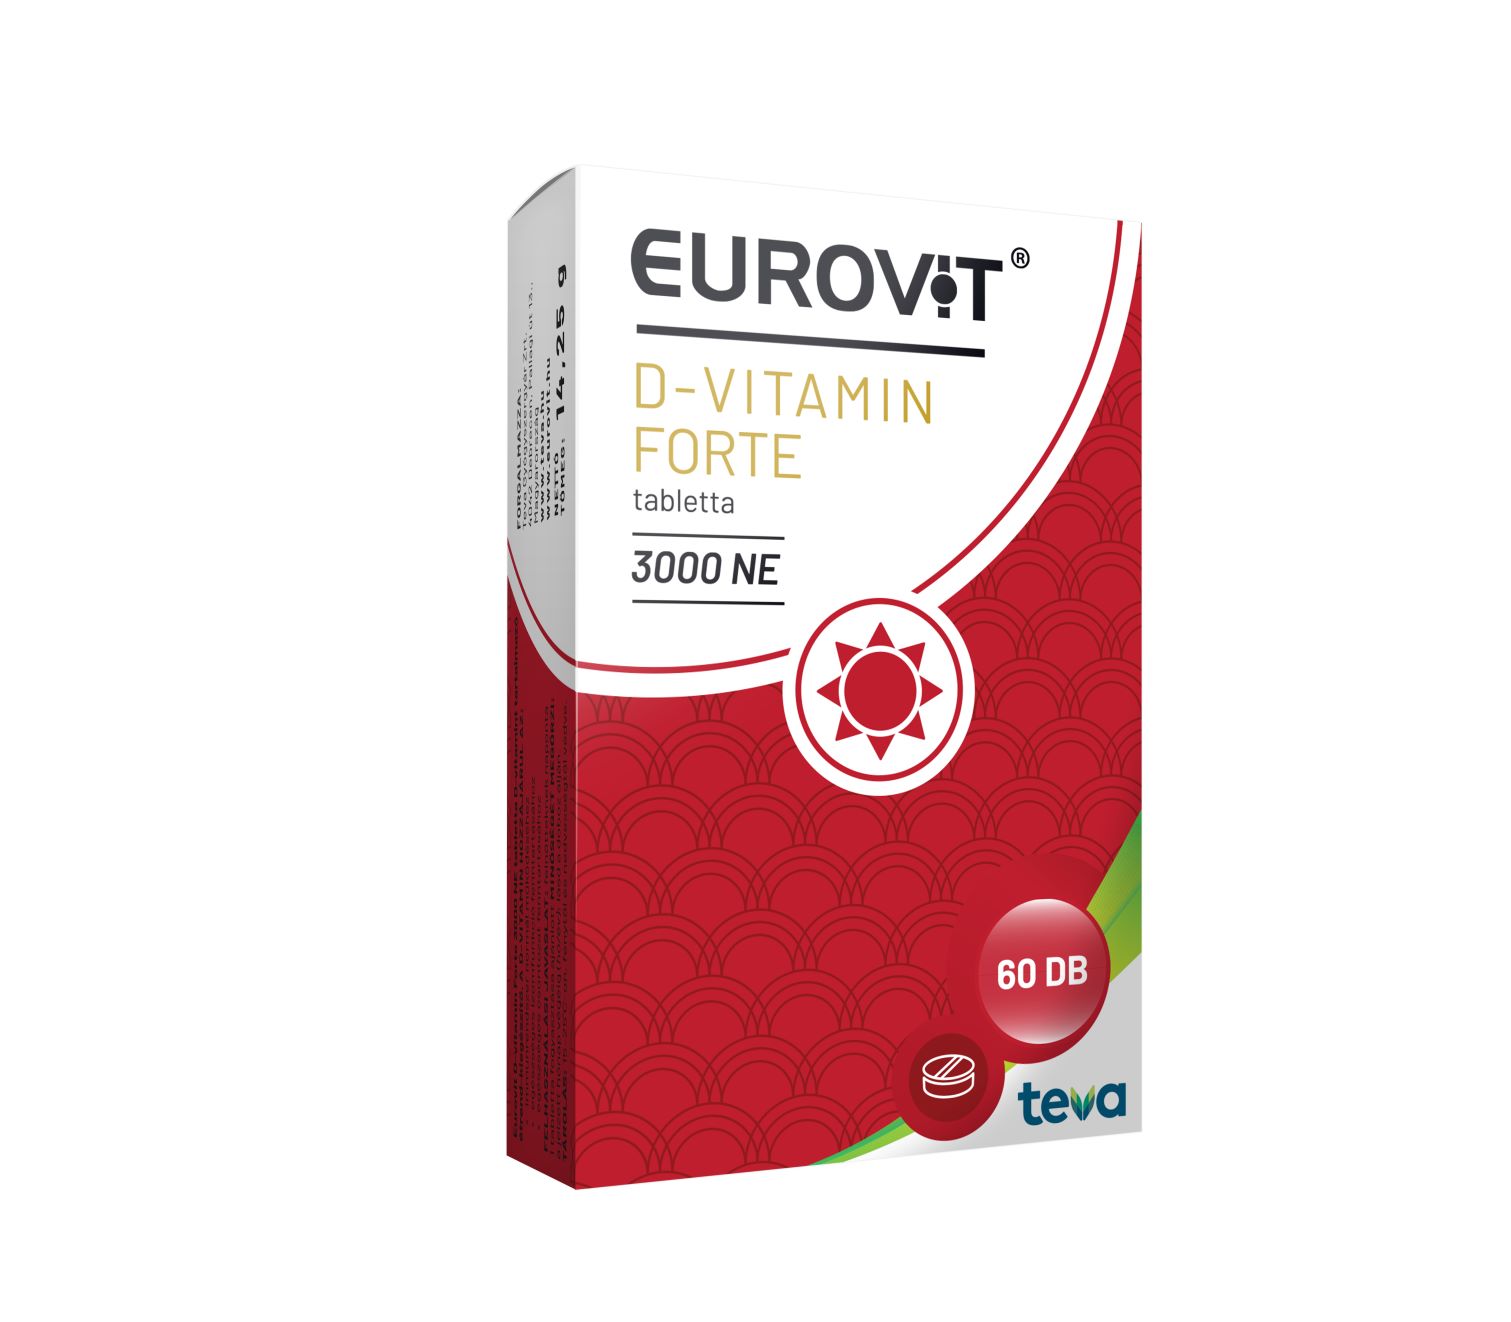 Eurovit D-vitamin 3000 NE Forte tabletta